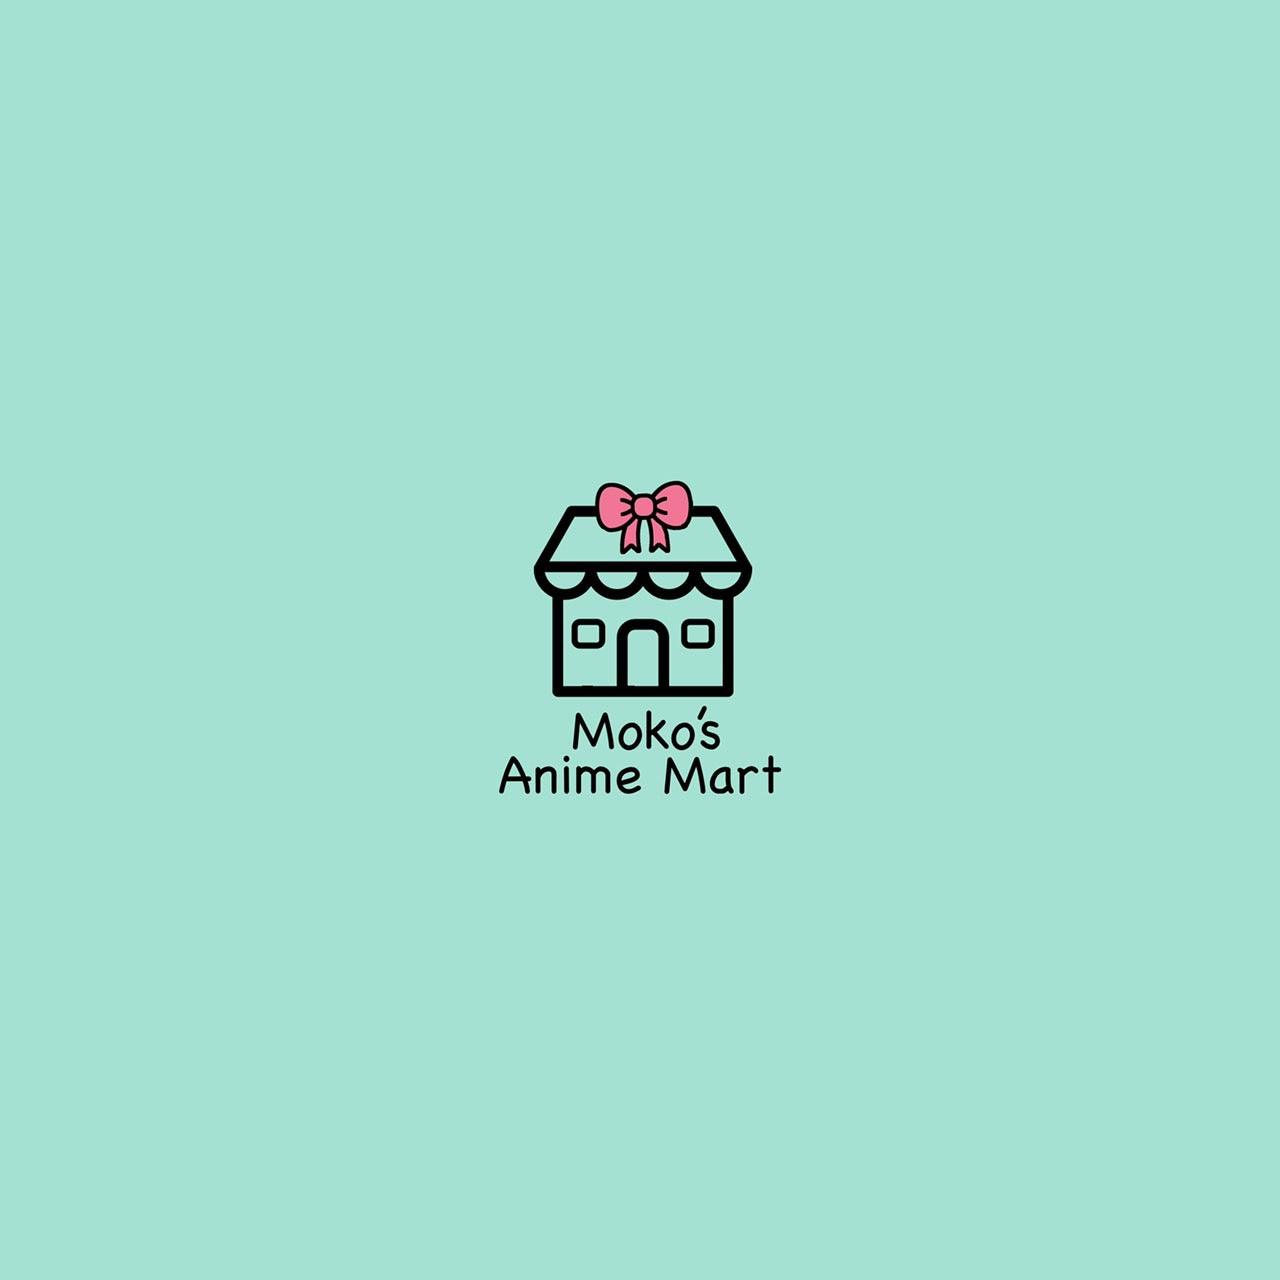 Anime Mart - Moko's Boutique